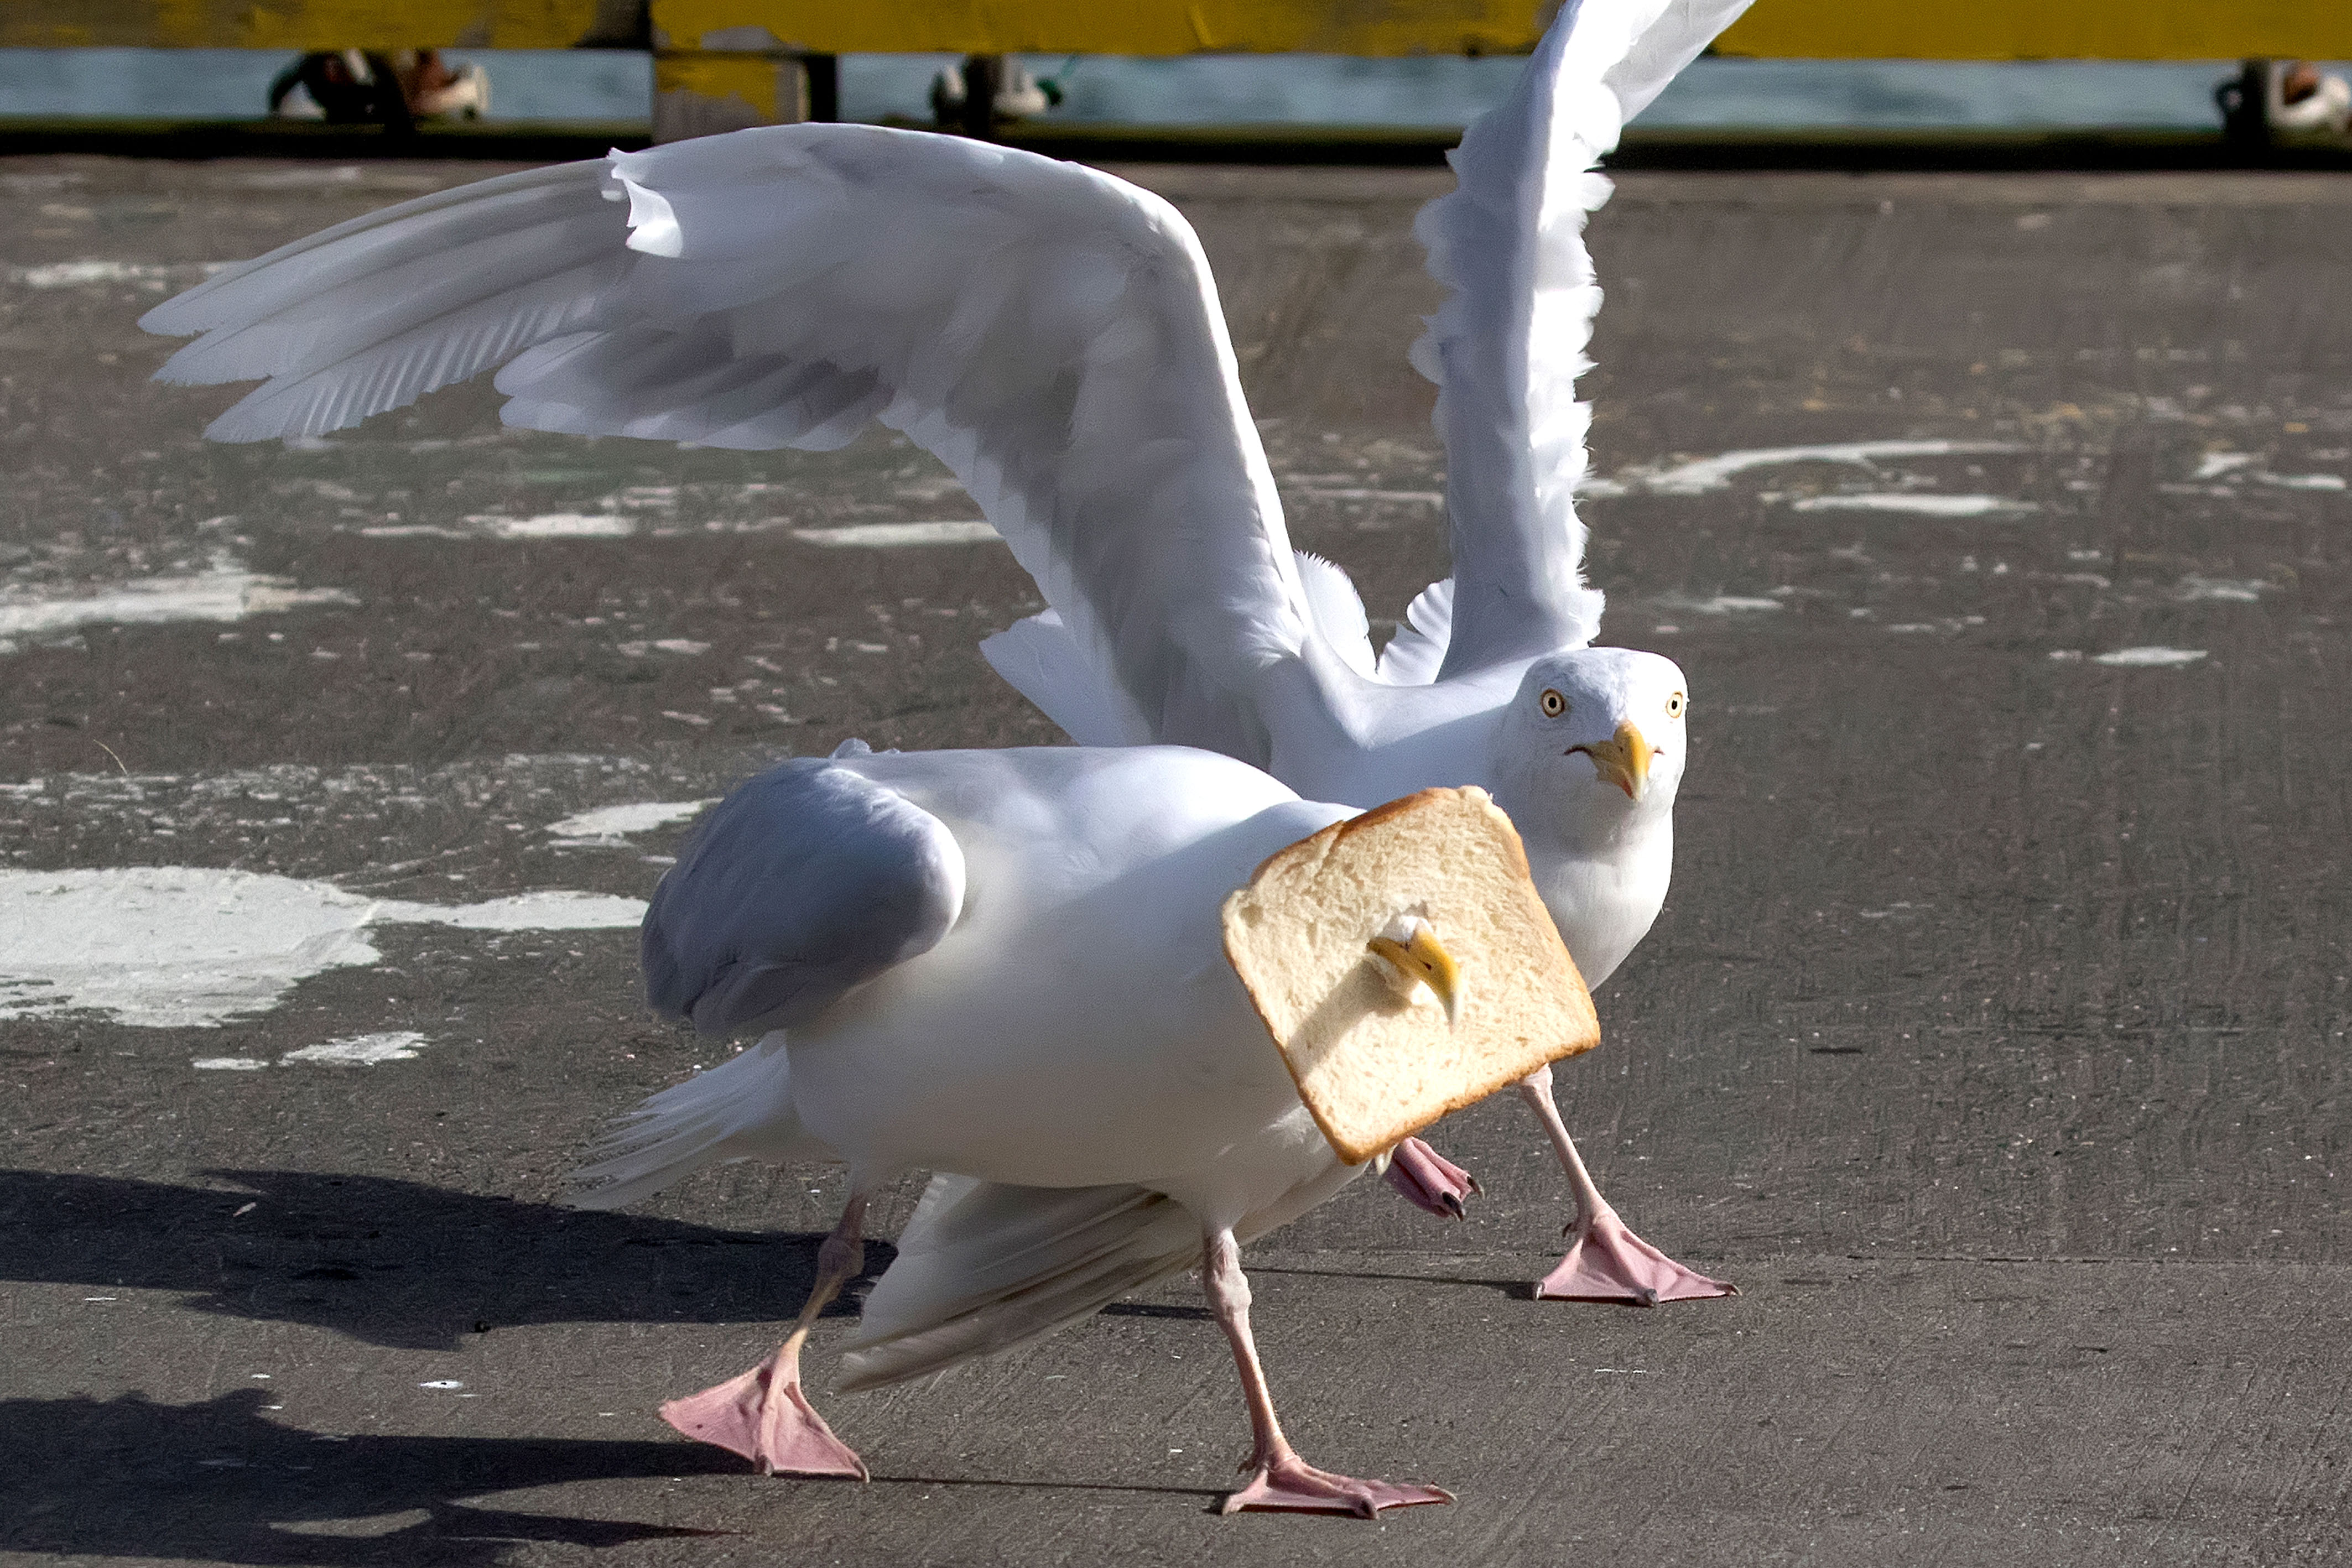 In-bread gull - Seagull sticks beak through slice - Caters News Agency